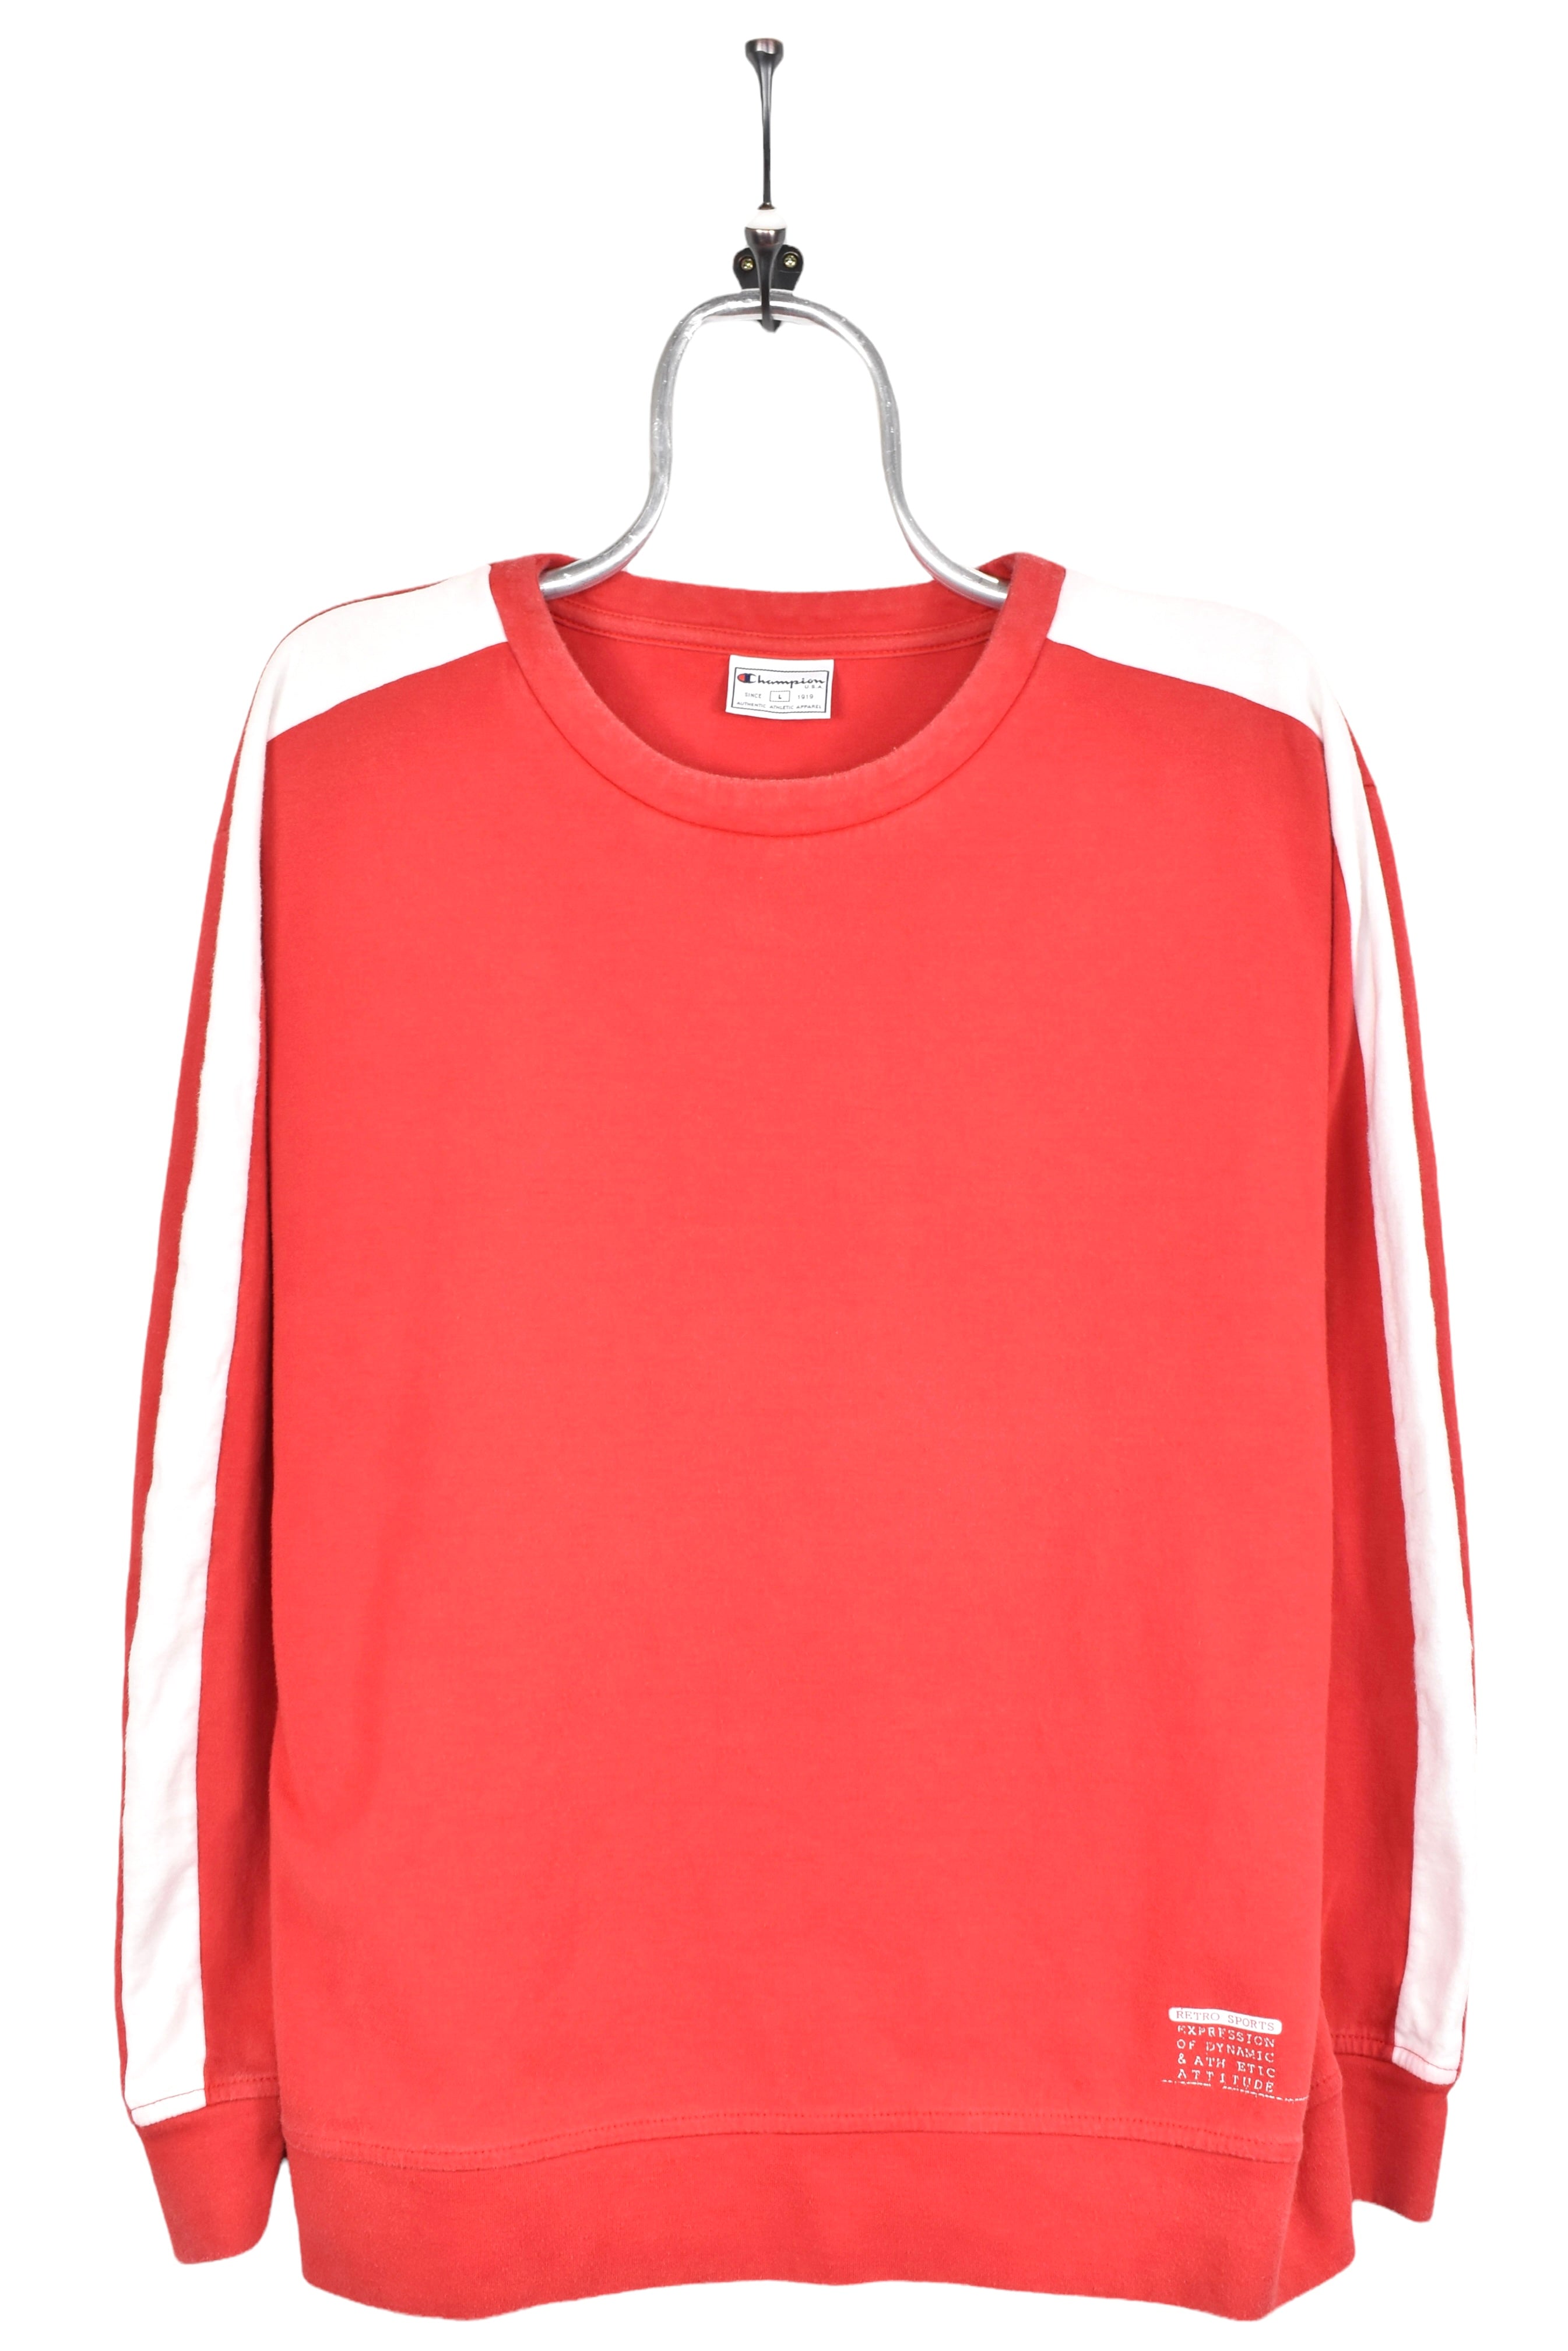 Vintage Champion sweatshirt, red graphic crewneck - AU Medium CHAMPION